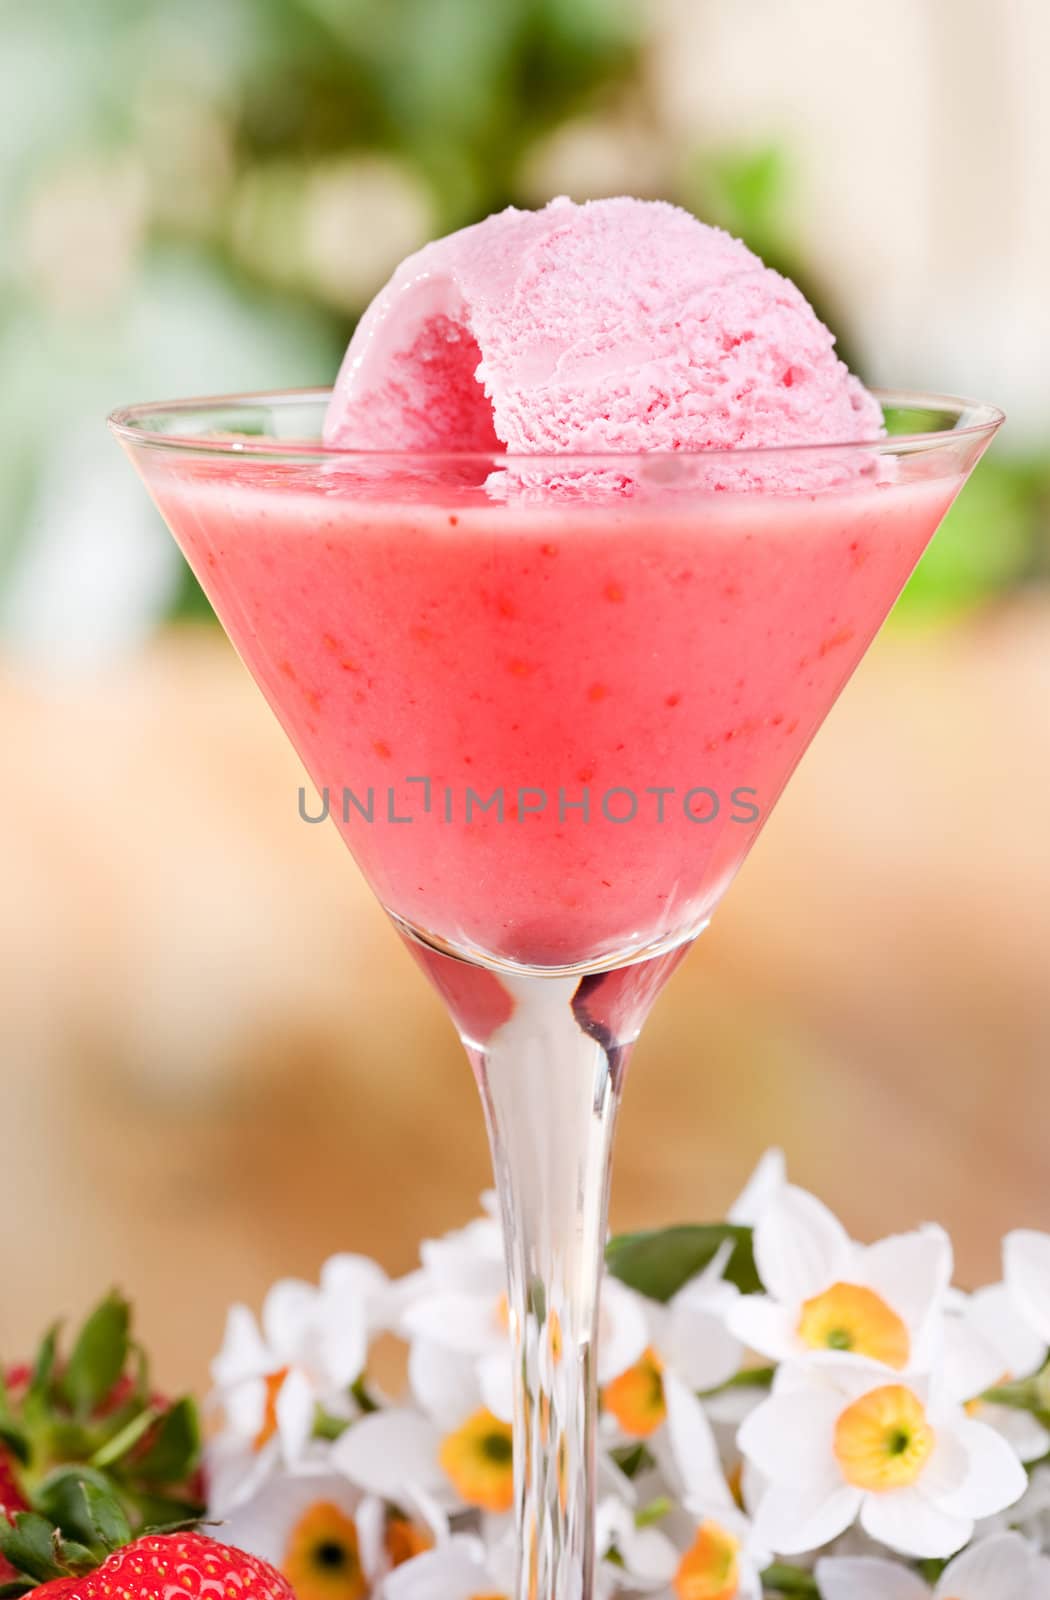 Strawberry Ice Cream Smoothie by leaf